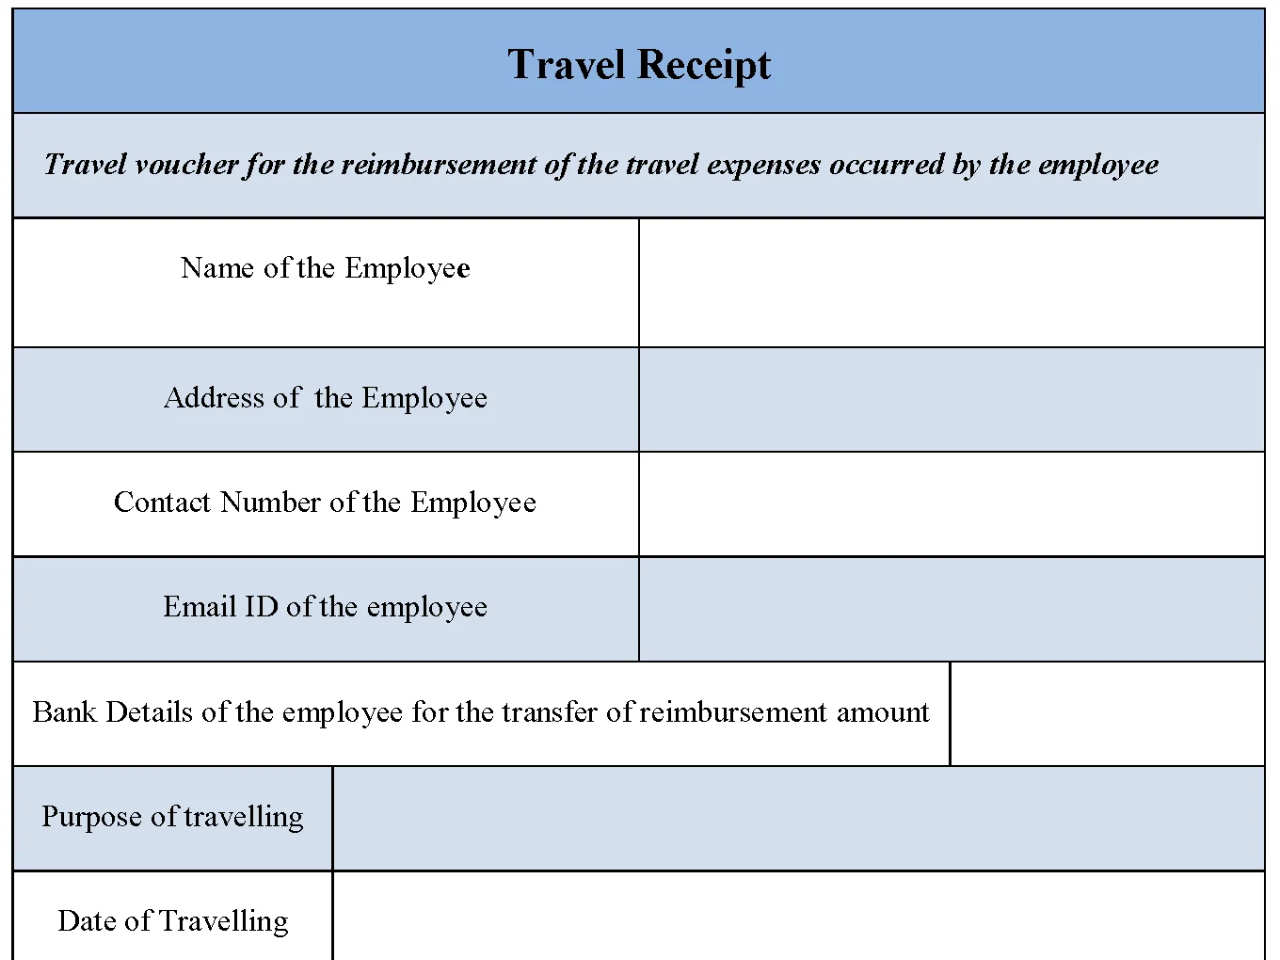 Travel Receipt Form